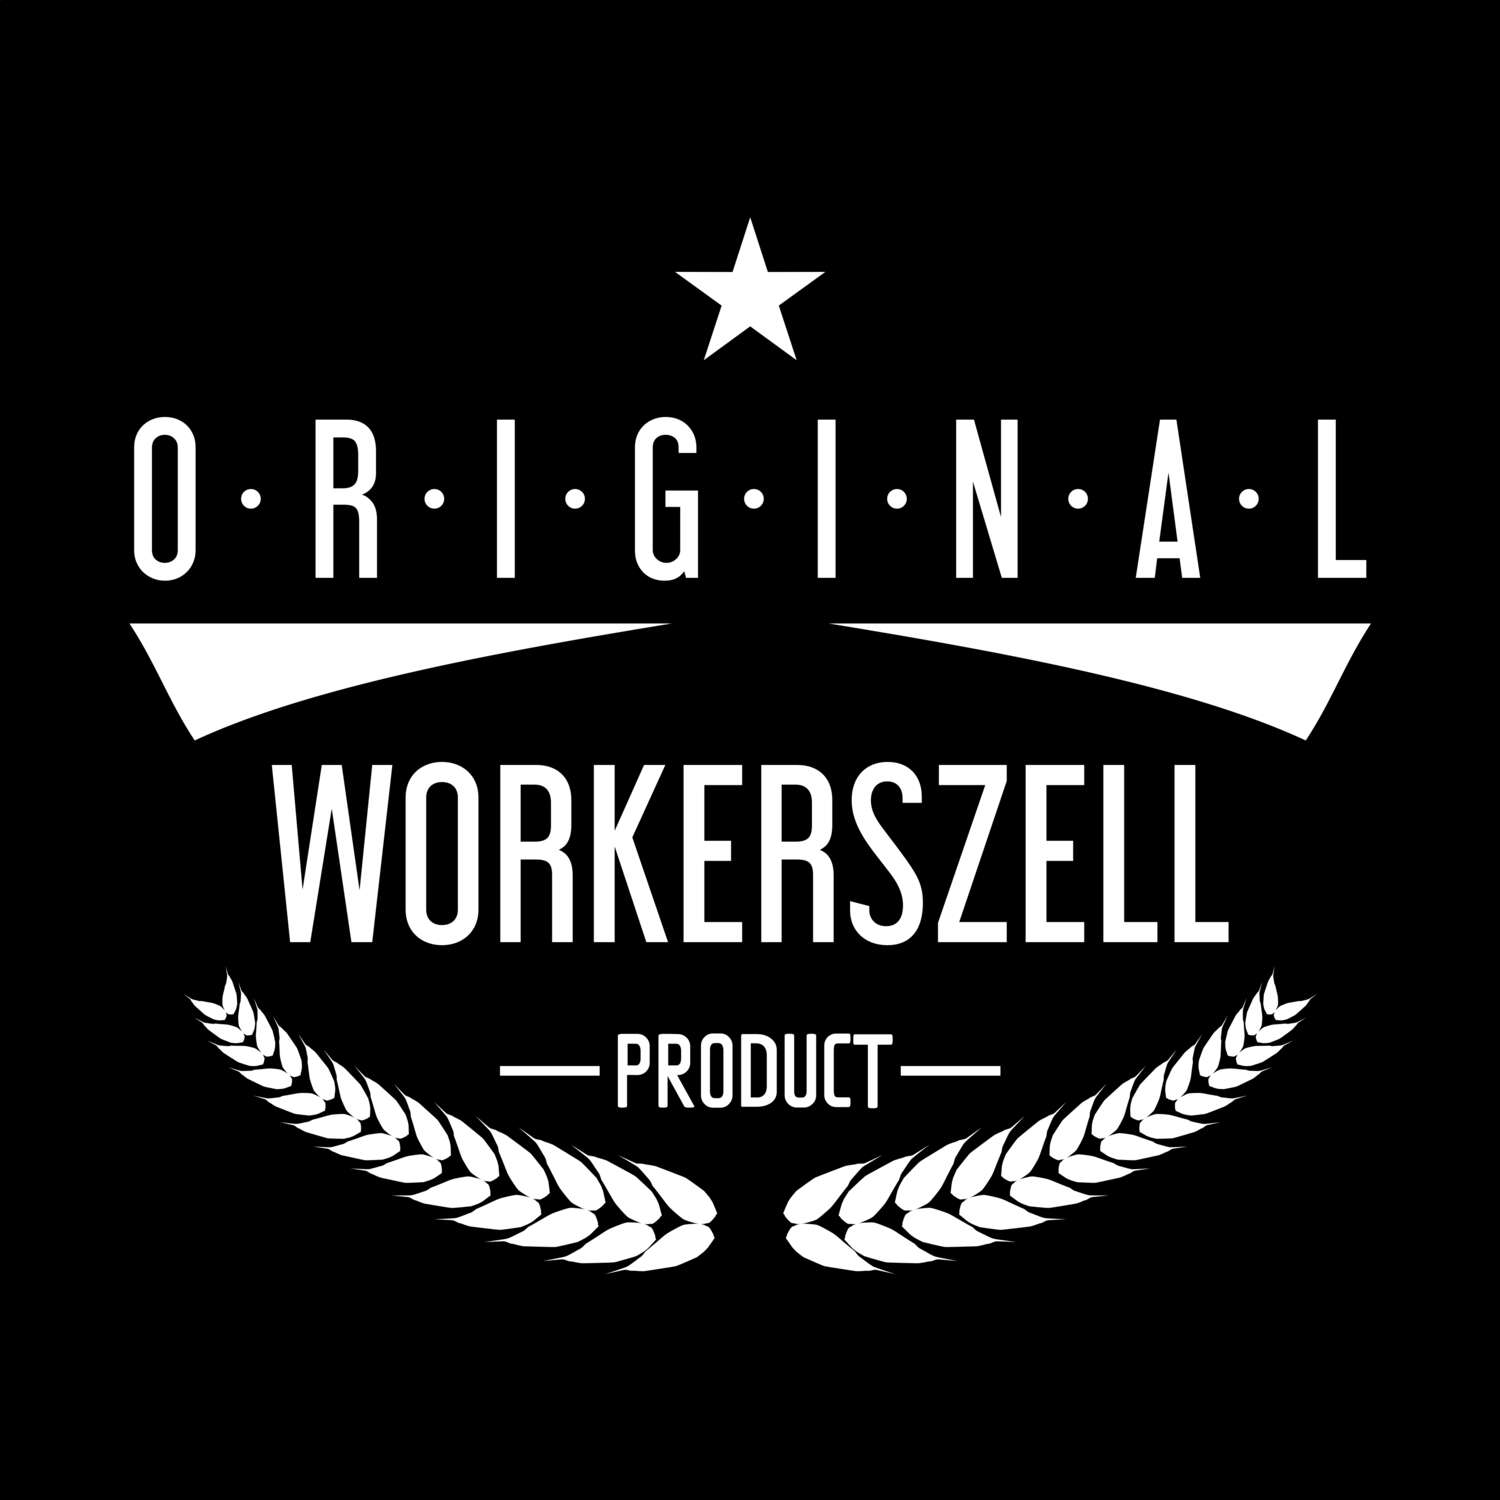 Workerszell T-Shirt »Original Product«